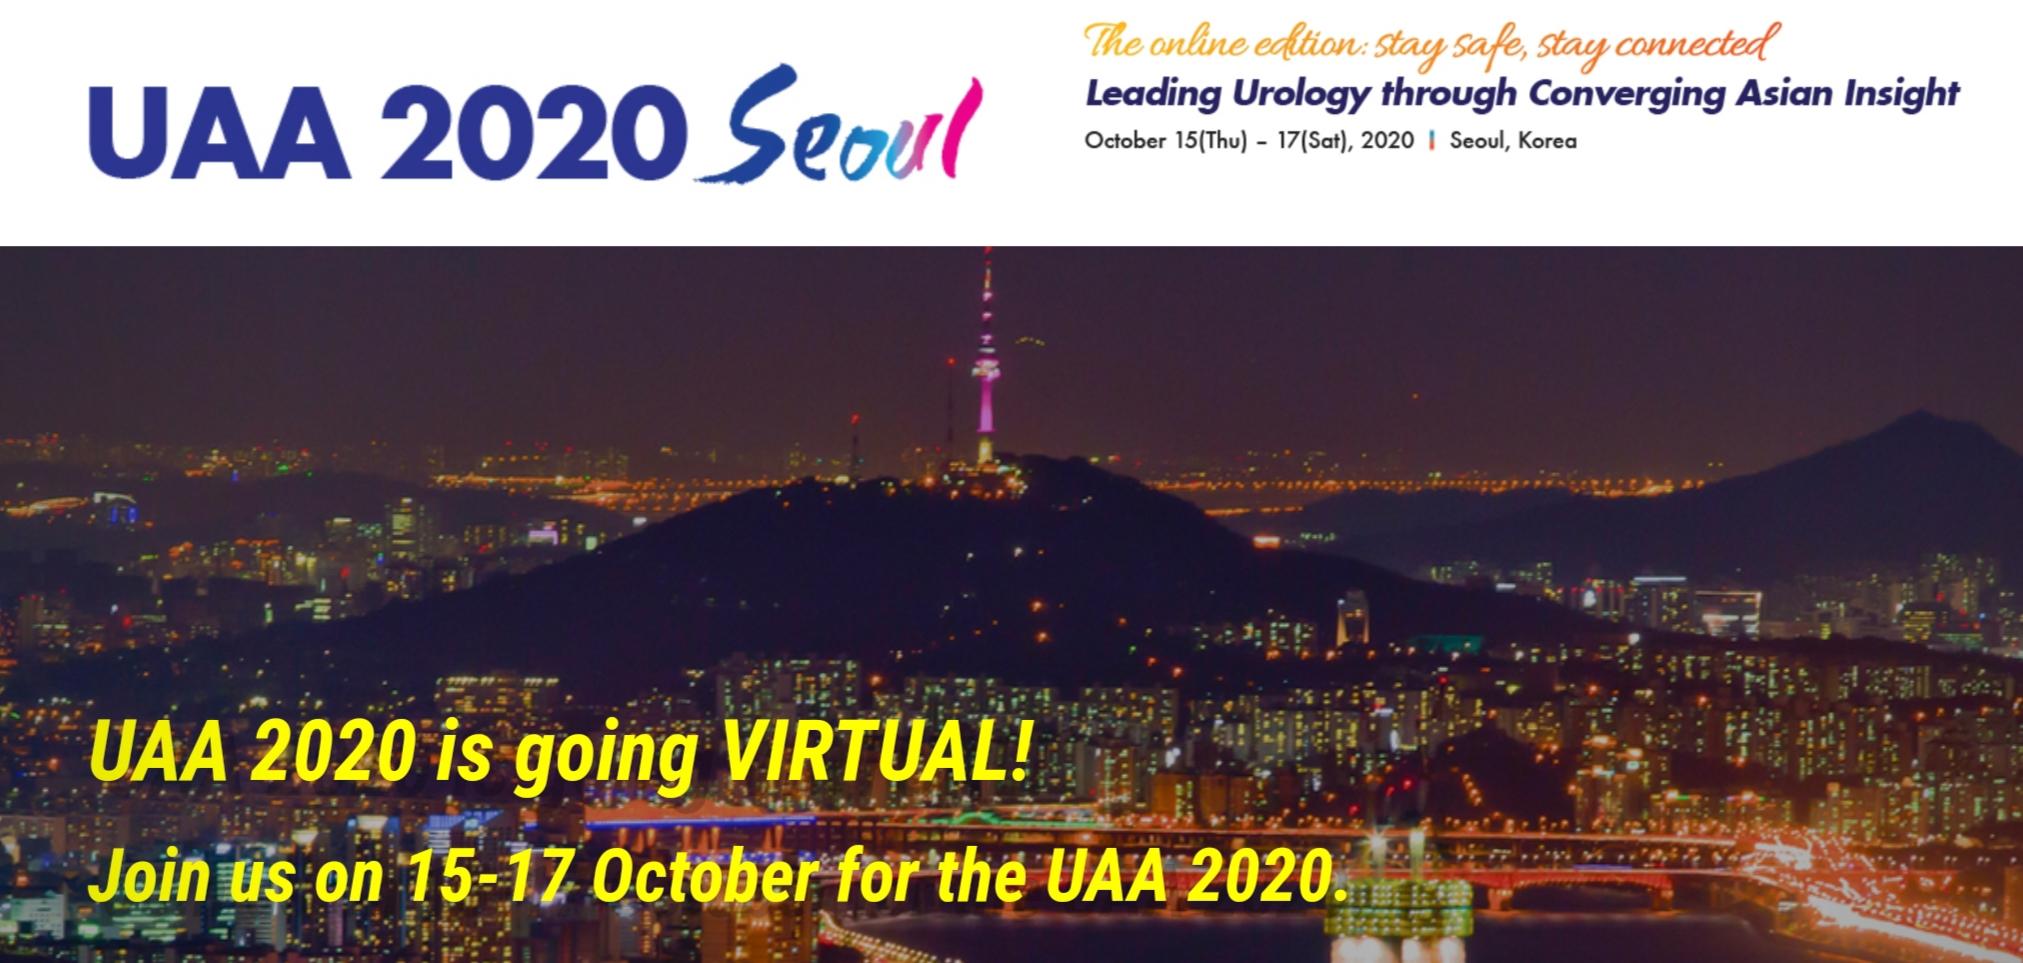 Virtual Congress of UAA 2020 Seoul: A Great Success